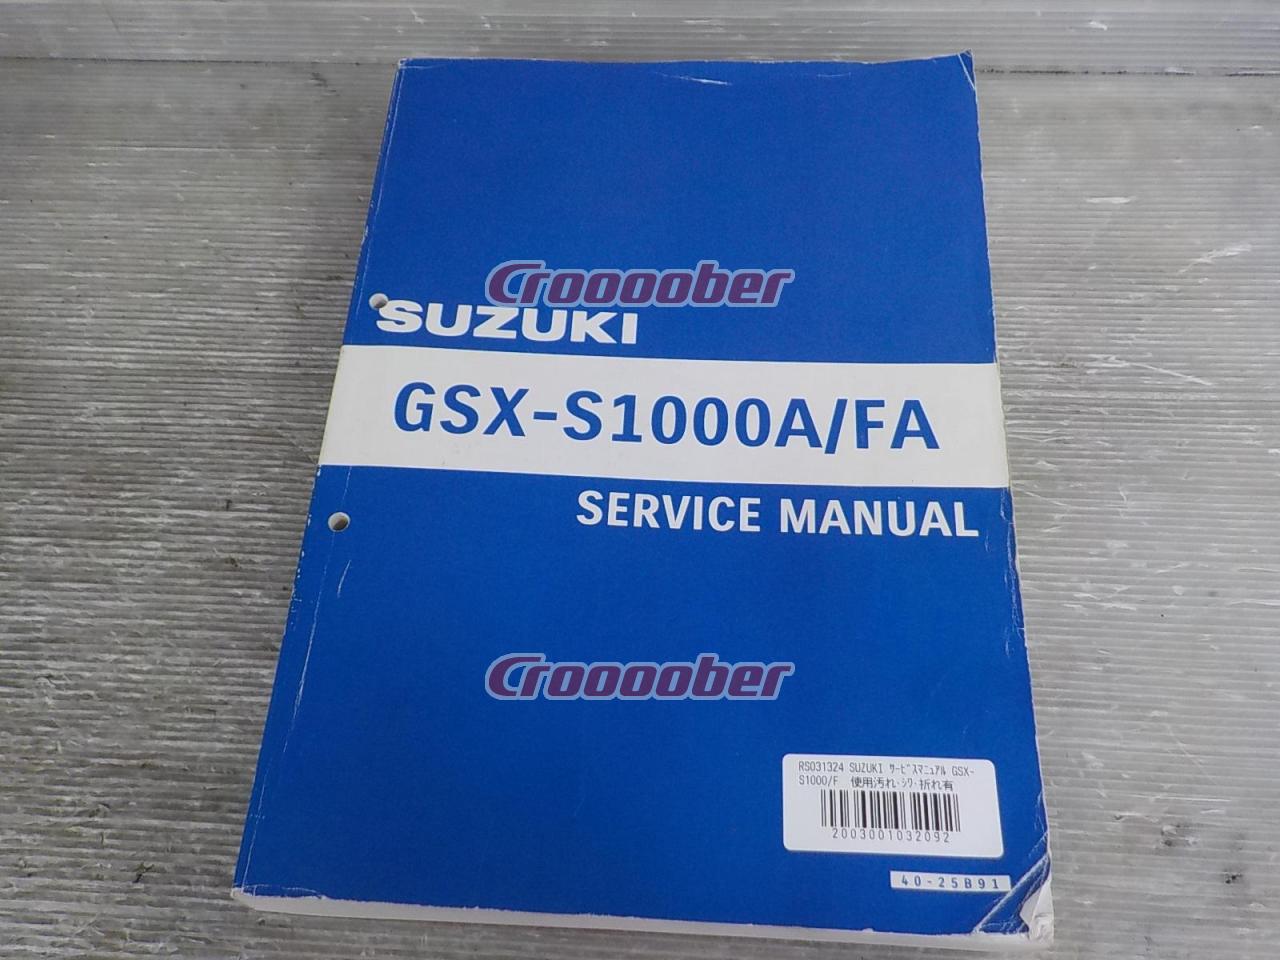 SUZUKI GSX-S1000A /FA サービスマニュアル - library.iainponorogo.ac.id